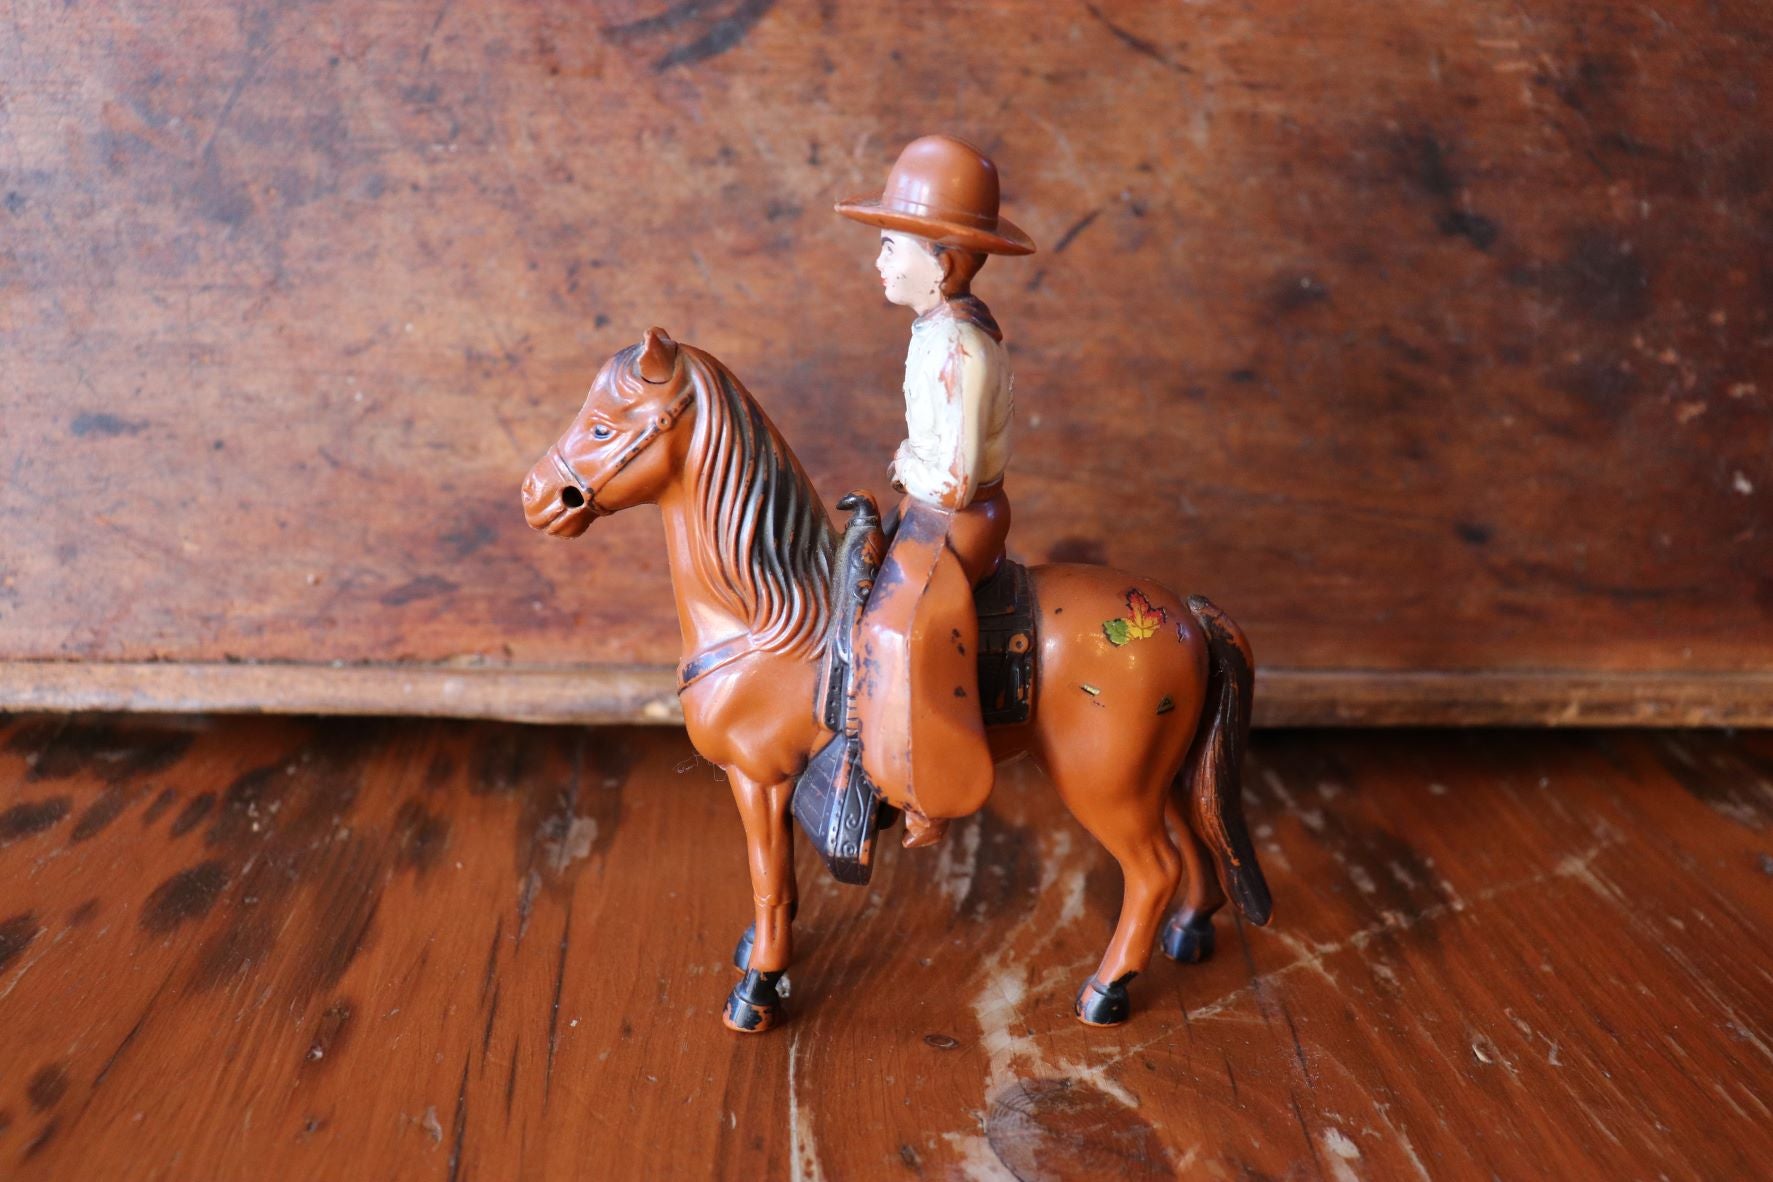 Vintage Cowboy and Horse Set - Reliable